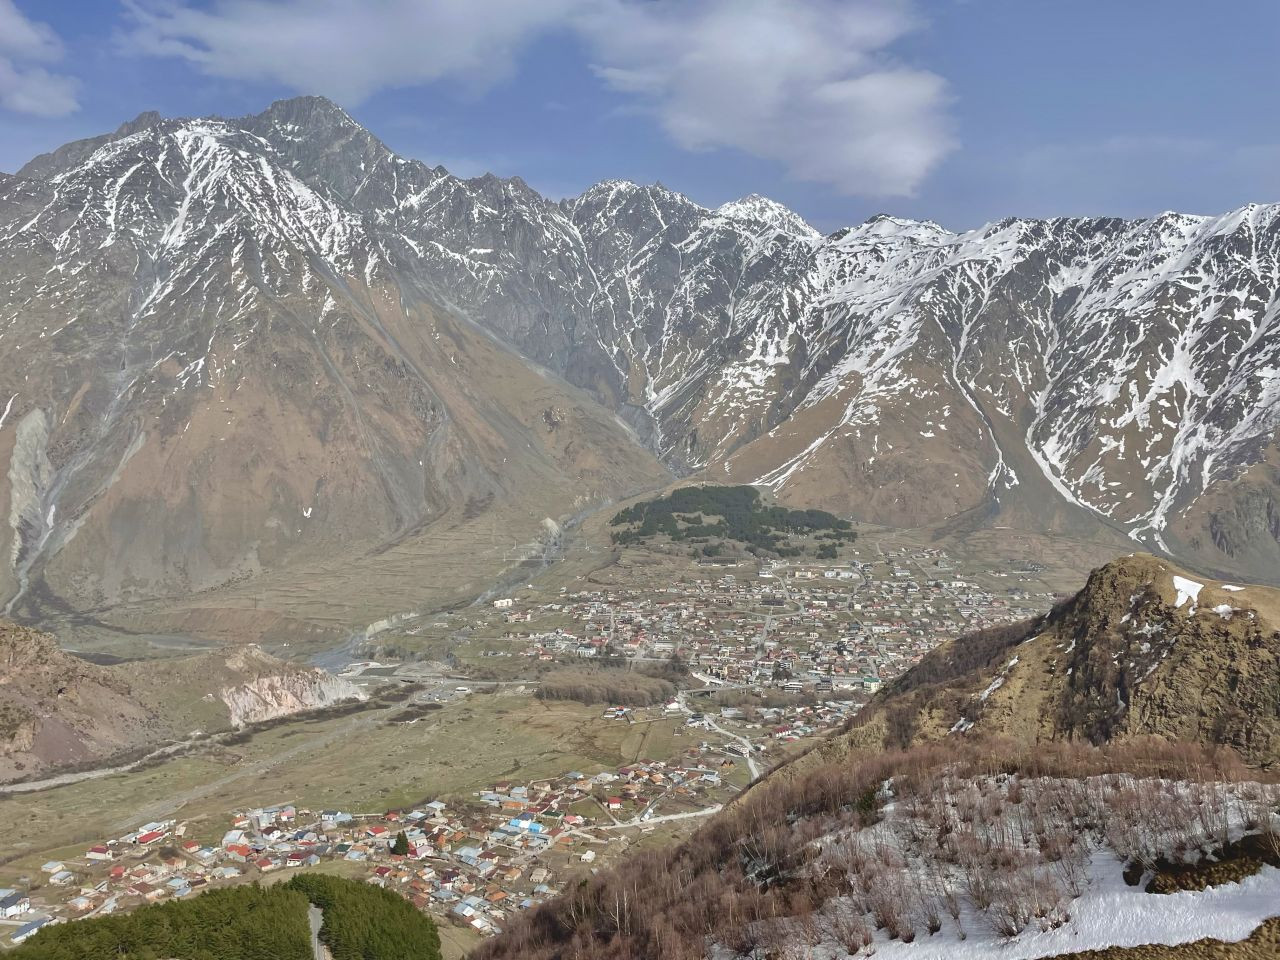 View of Stepantsminda in Kazbegi municipality. Image credit: Annina Michel